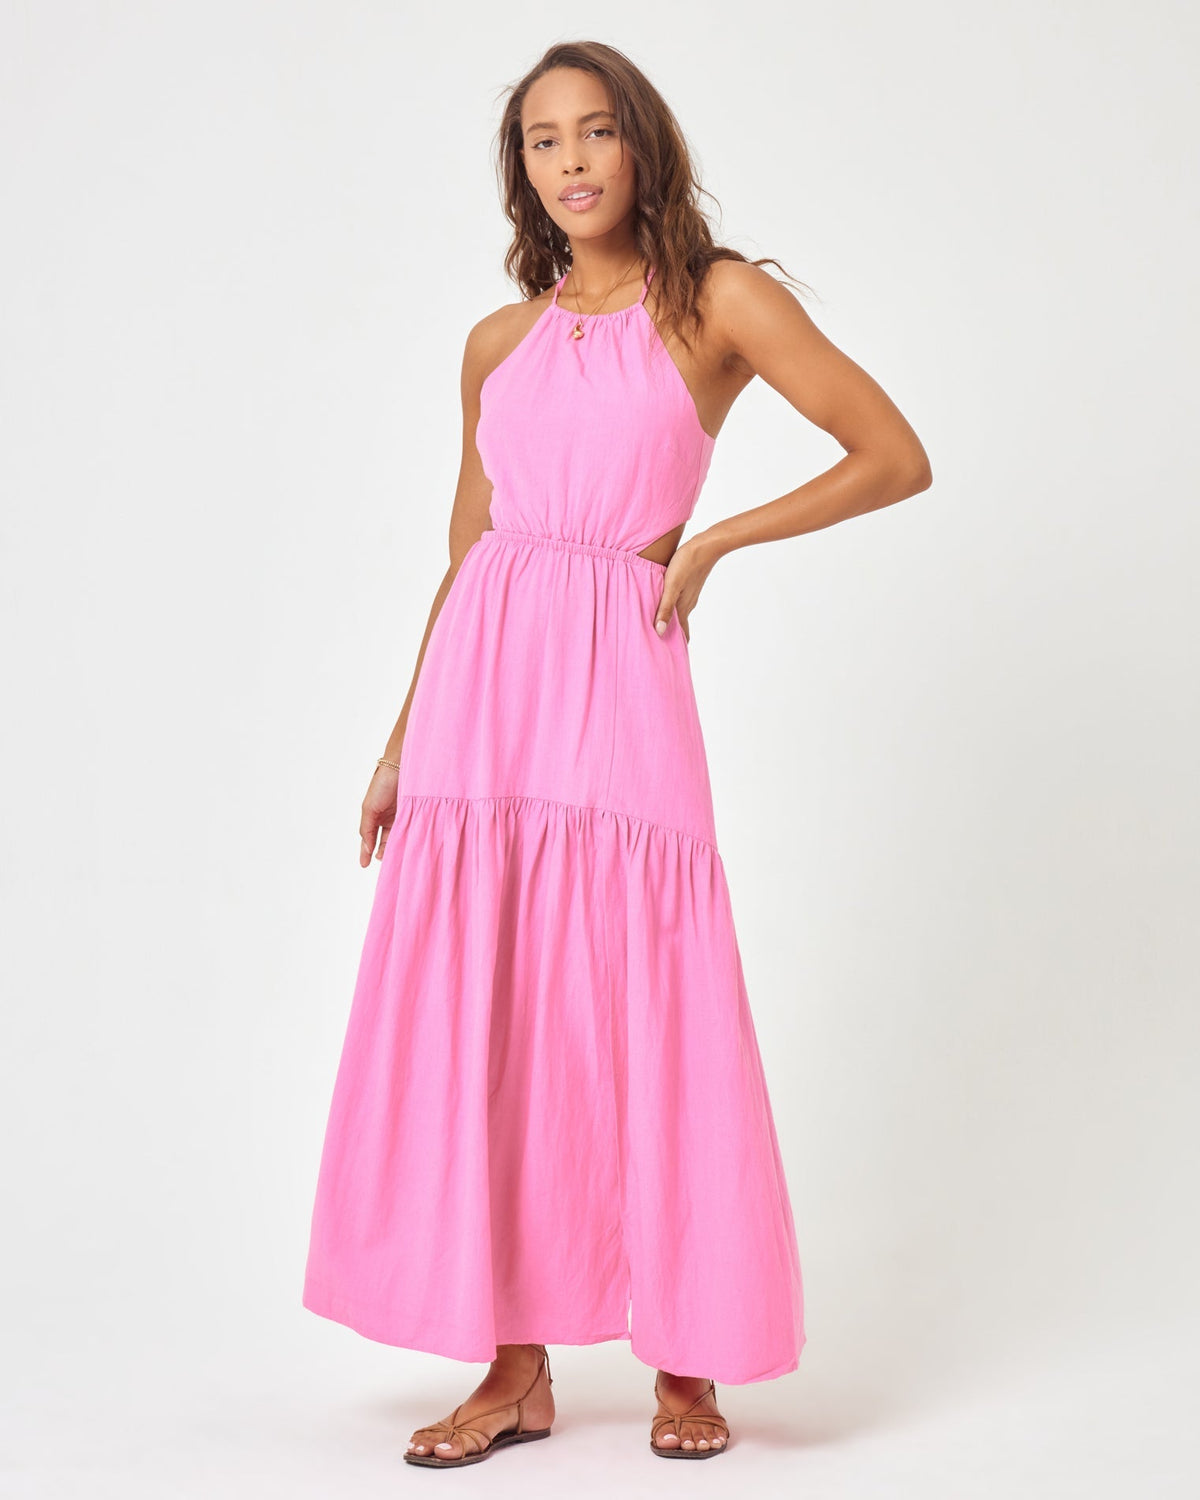 Jaide Dress - Guava Guava | Model: Natalie (size: S)